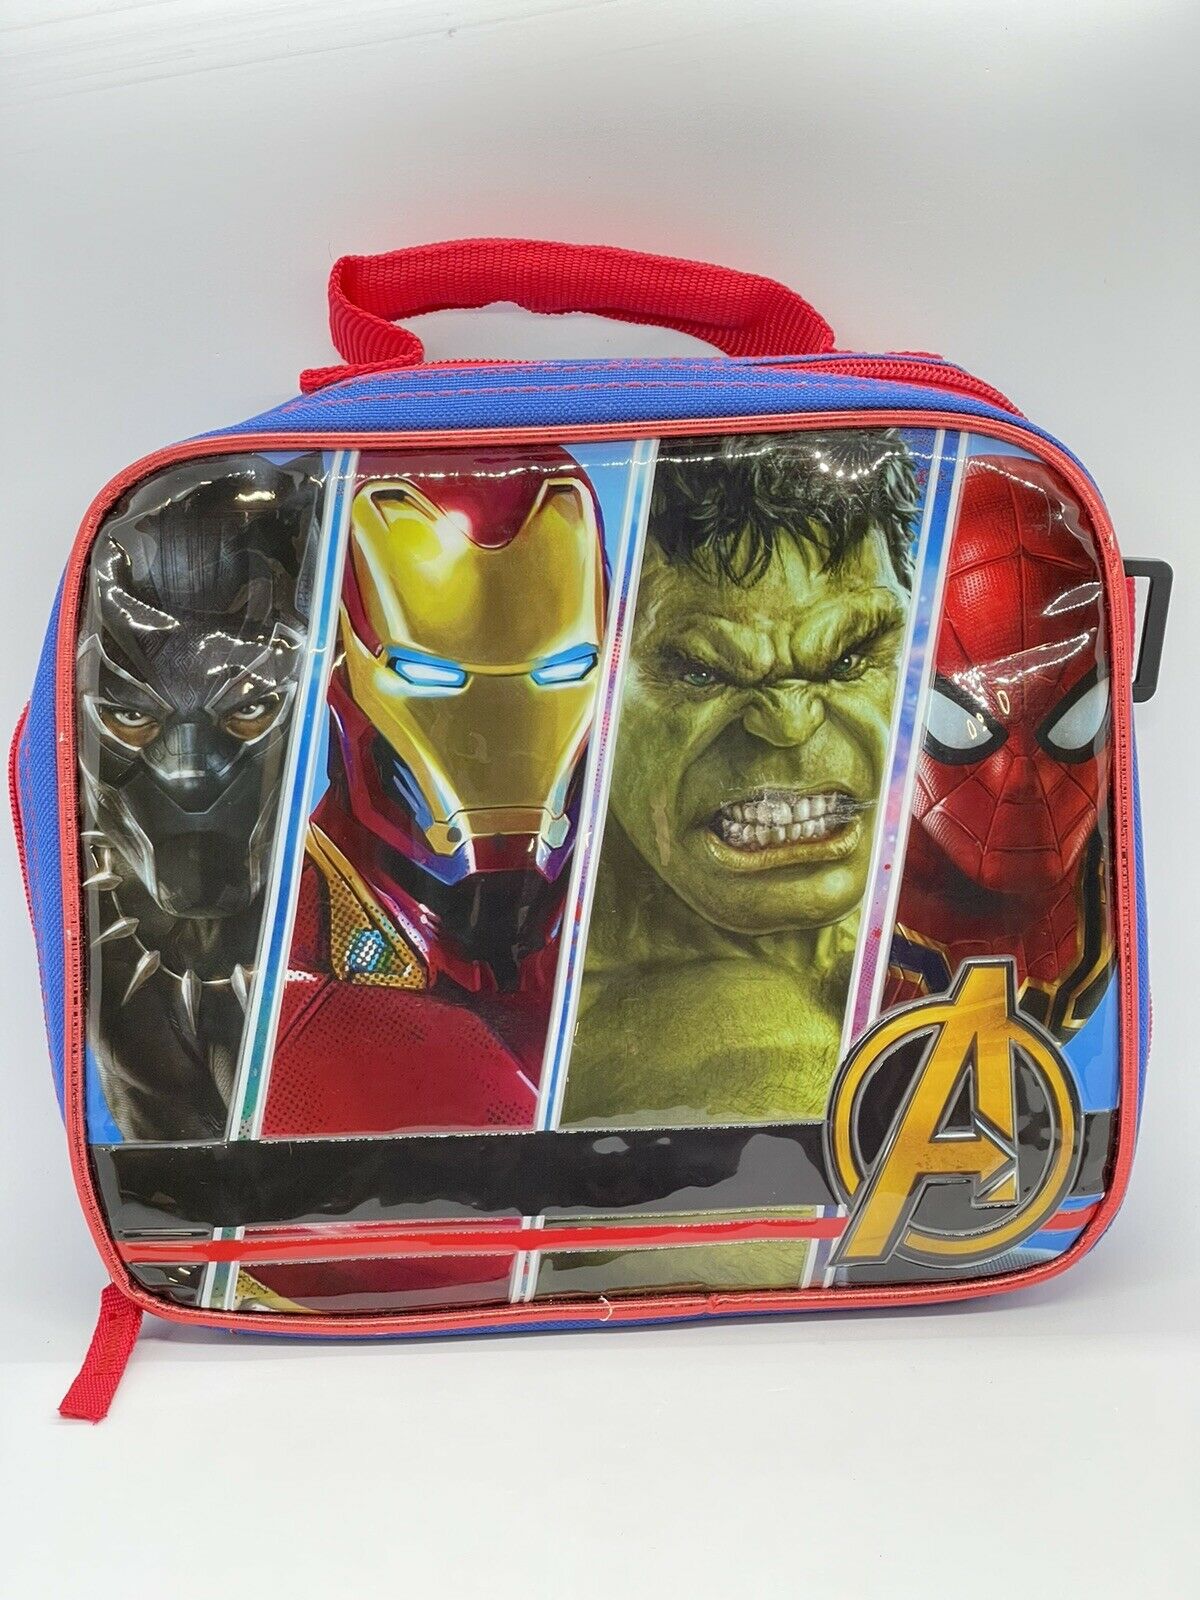 Marvel Avengers Infinity War Lunch Box, Black Panther, Hulk, Iron & Spider Man